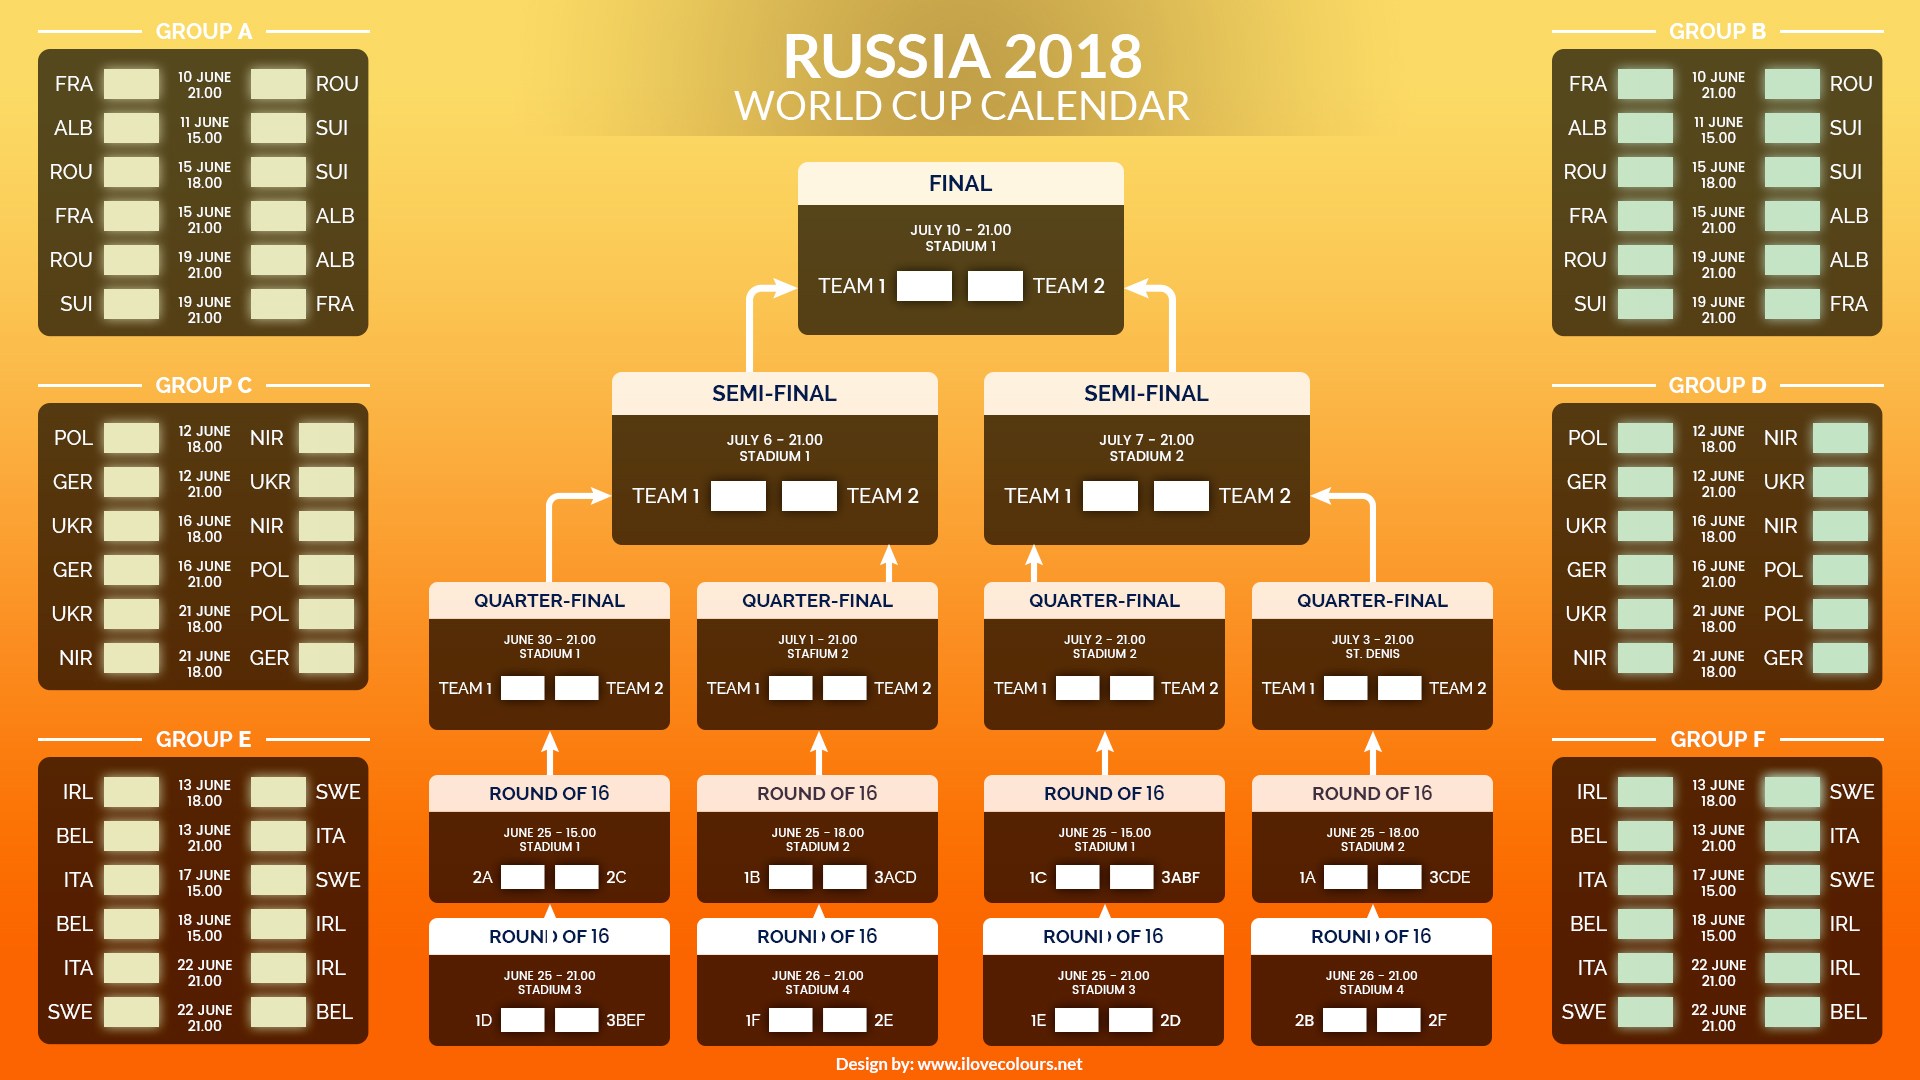 World Cup Calendar Russia 2018 - Fifa - download - color 2